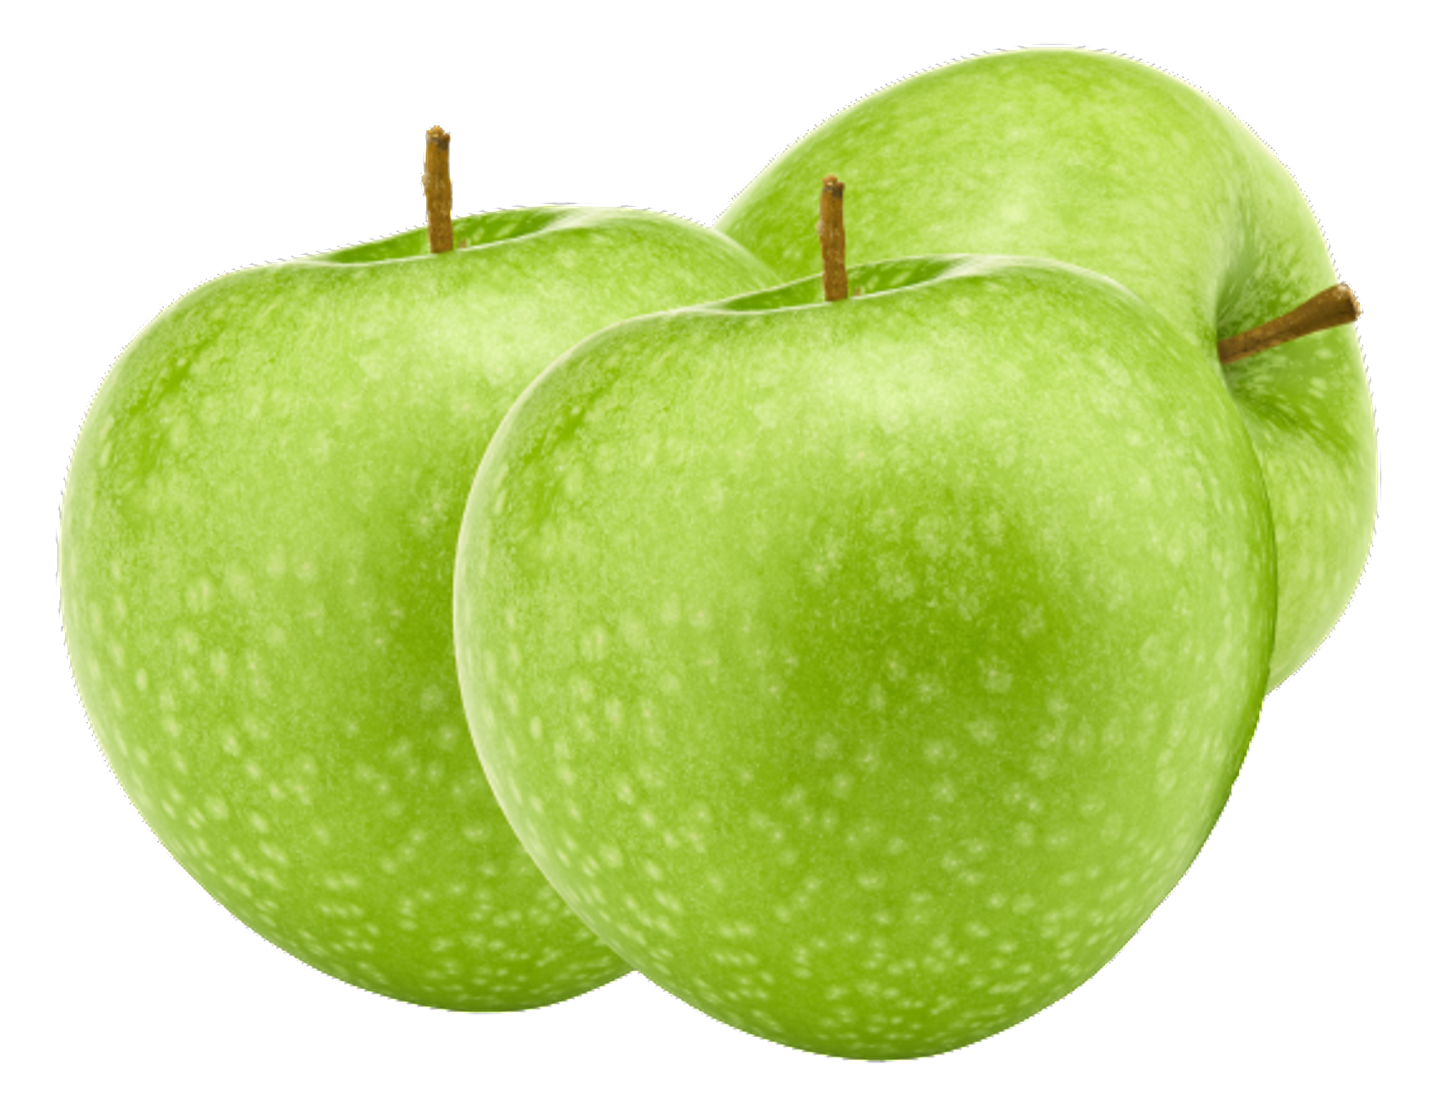 https://pinemelon.com/image/f/12941-organic_granny_smith_apples_3_pack.jpg?w=1100&h=1100&_c=1704227064